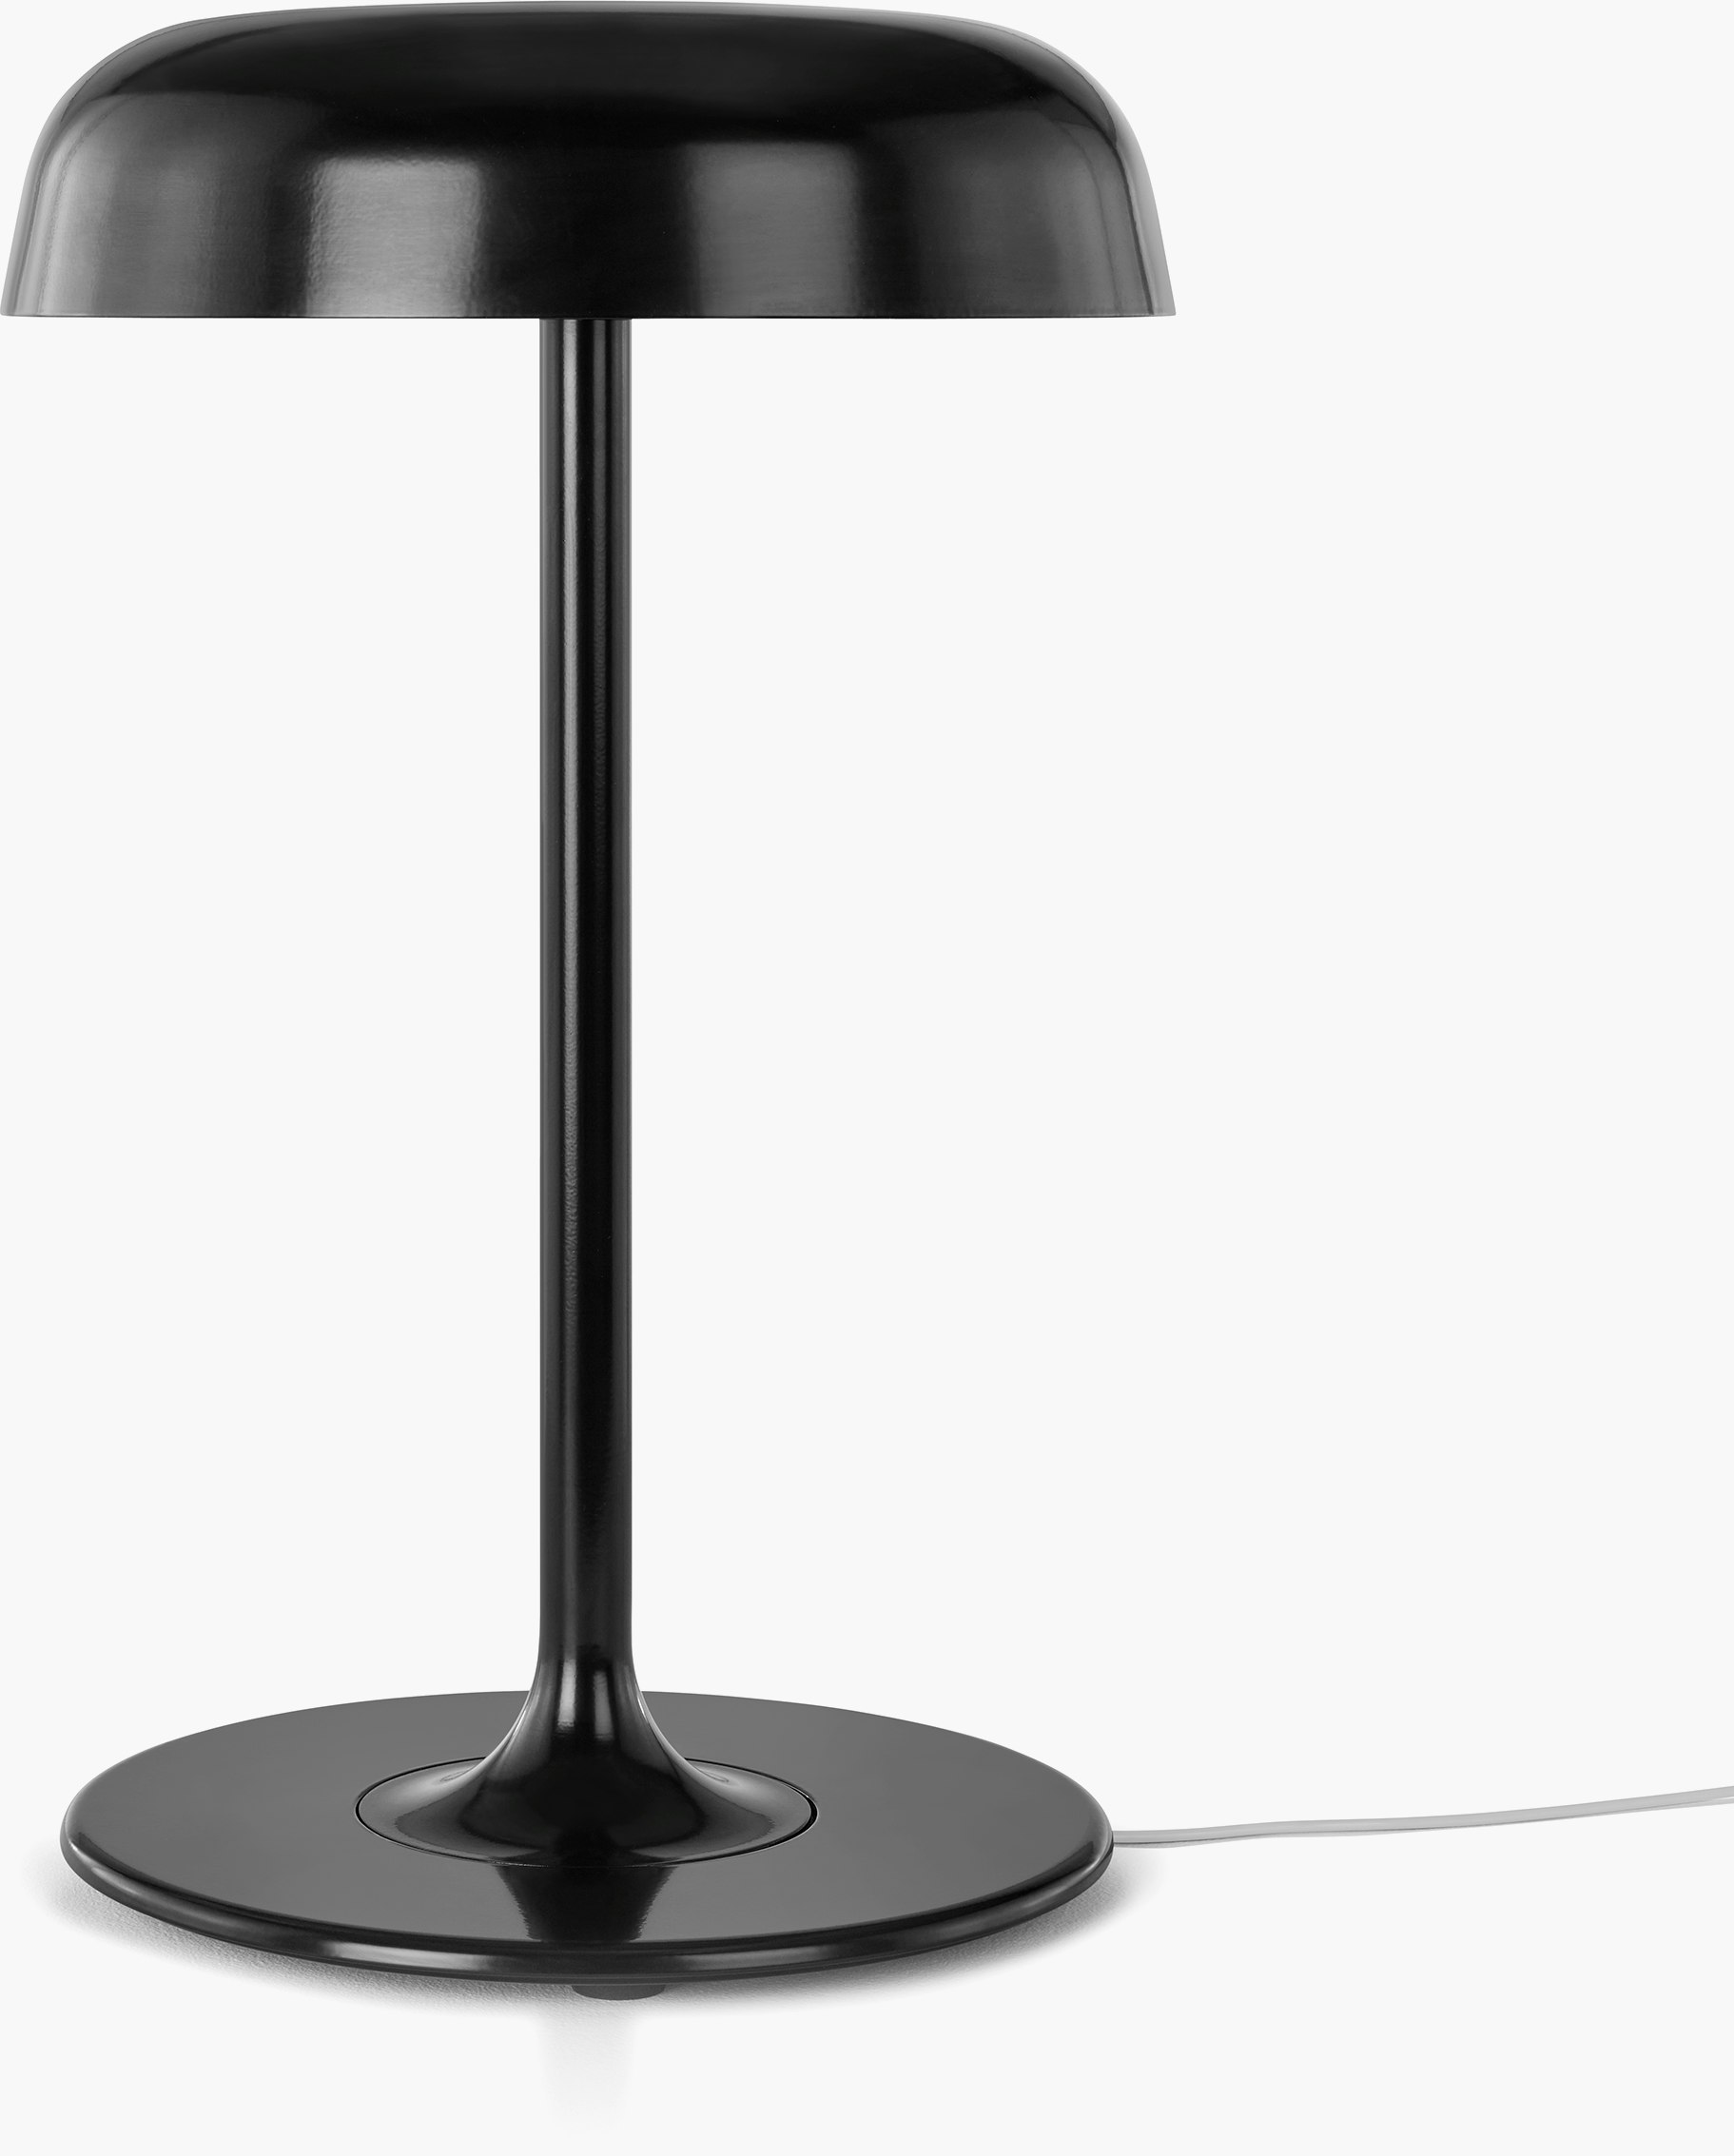 Ode Desk Lamp, Black at Design Within Reach